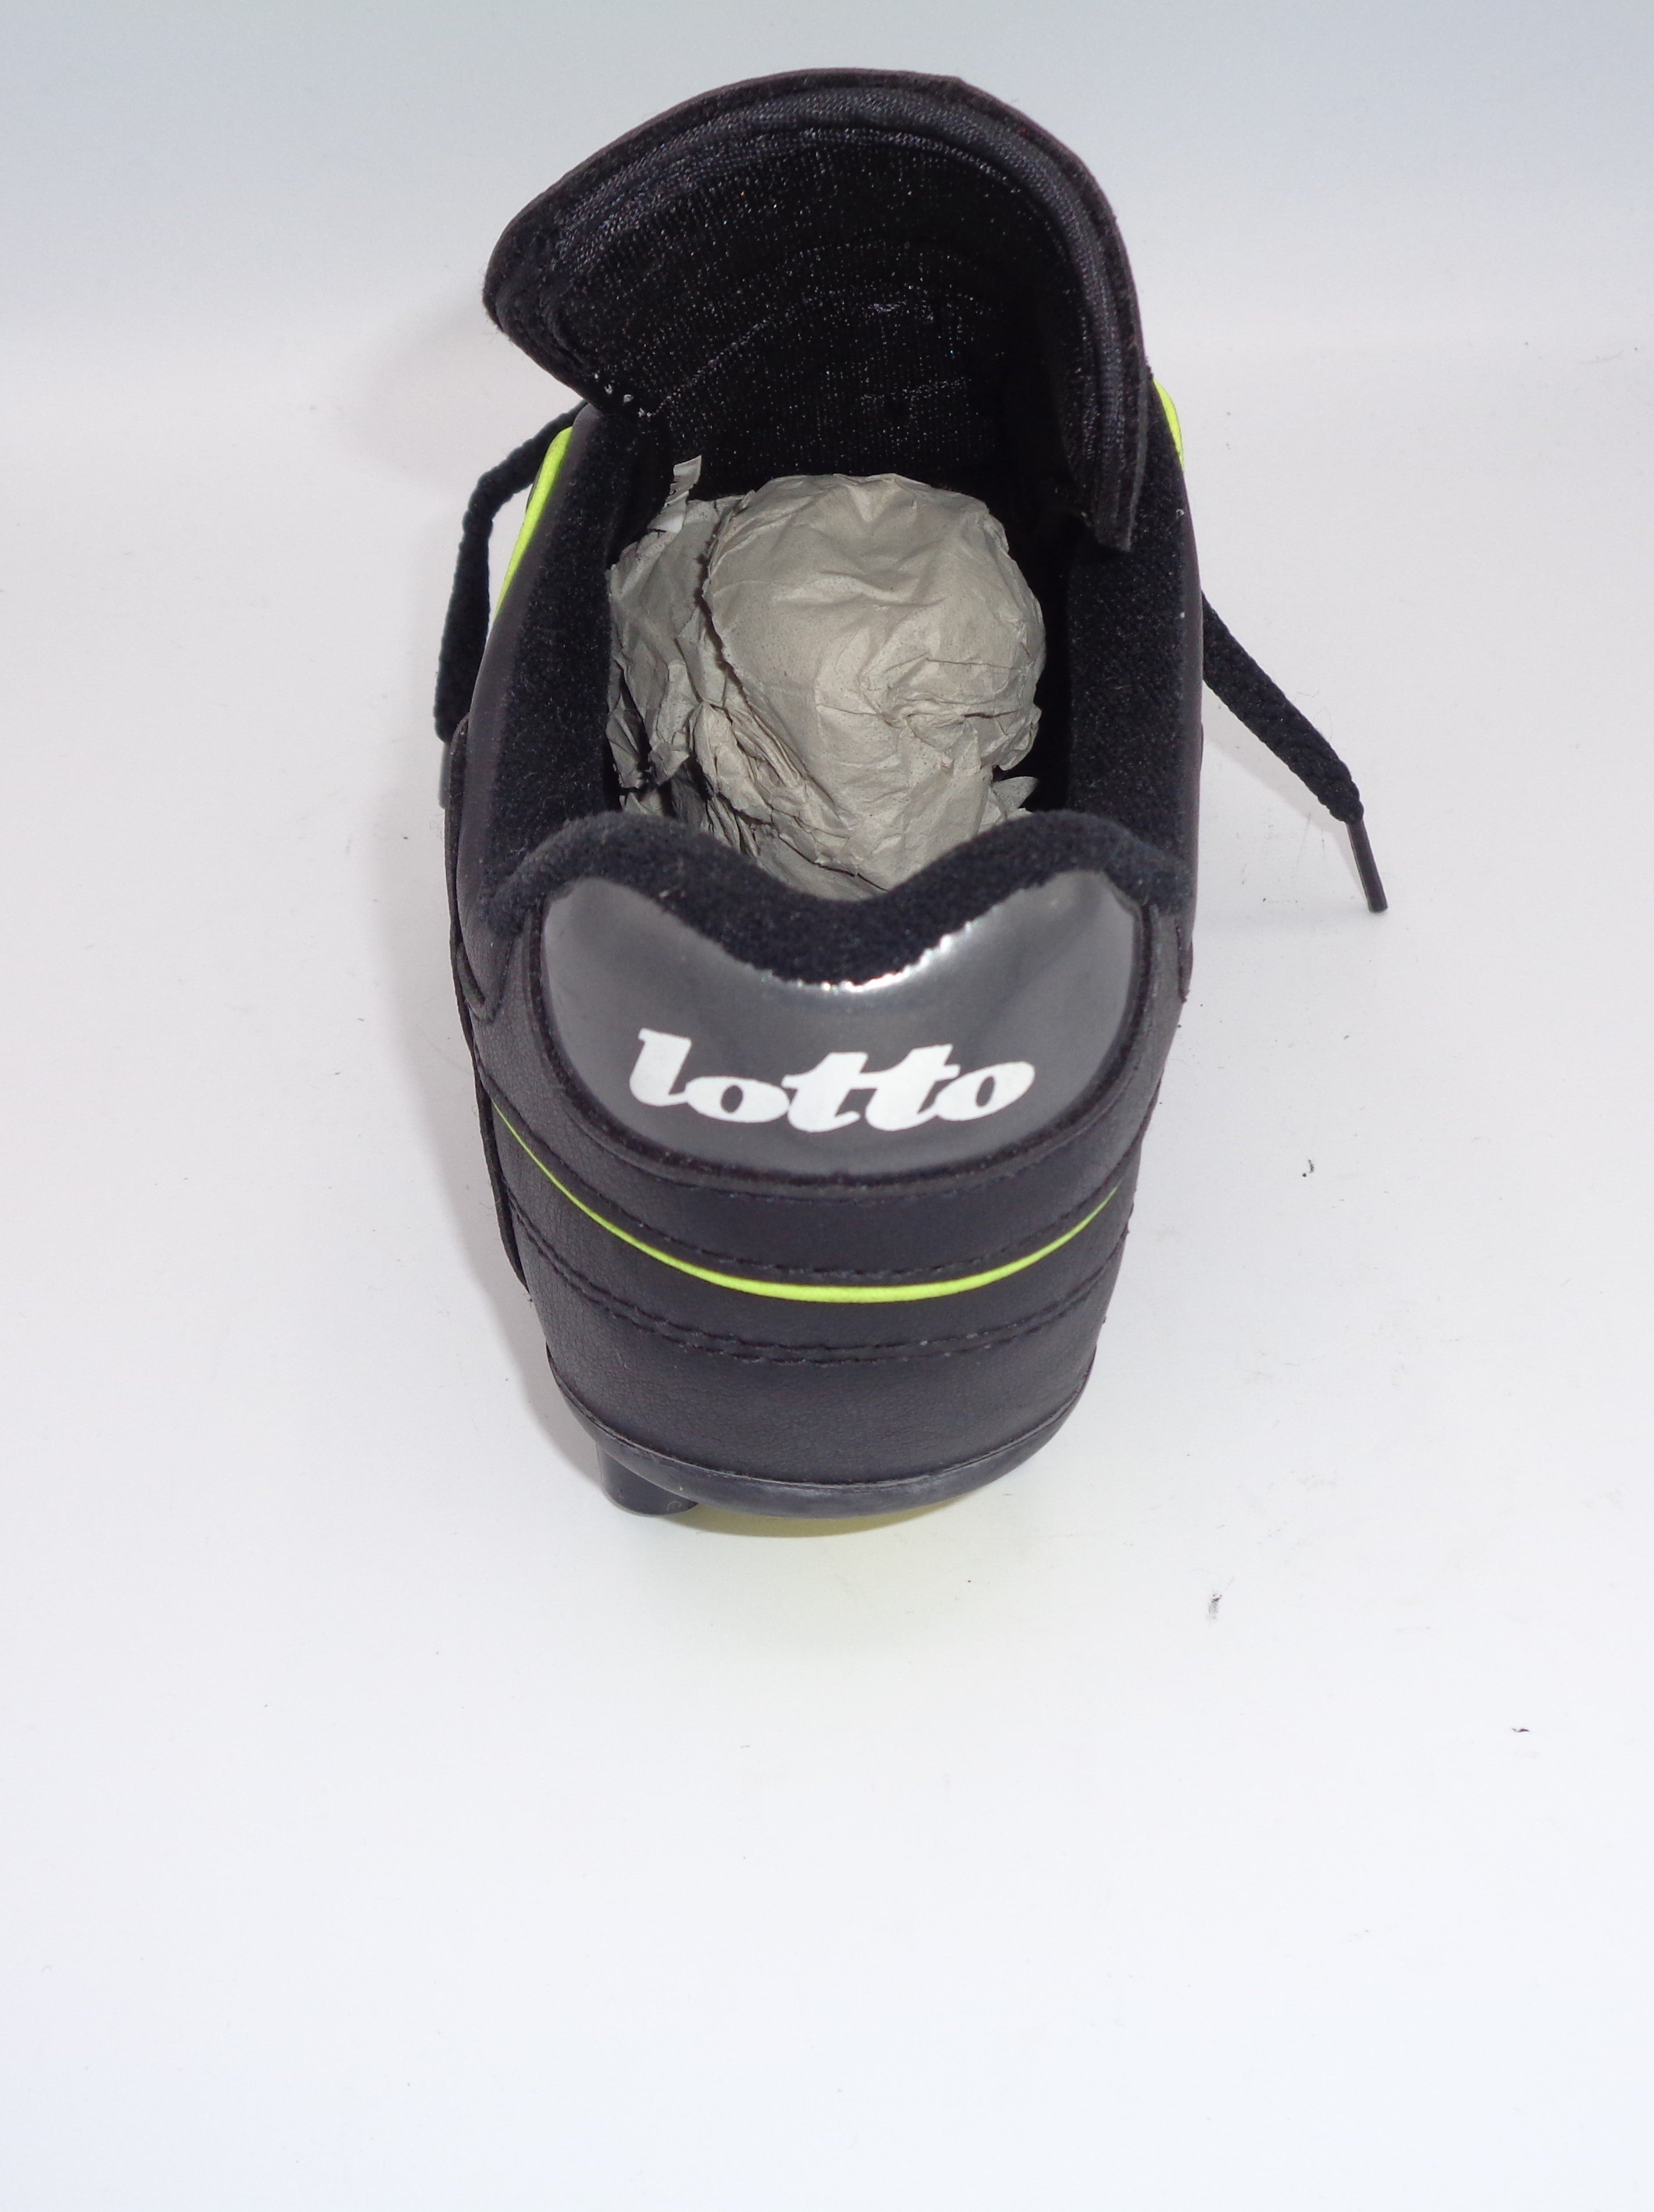 LOTTO ITALIA BLACK YELLOW FOOTBALL BOOTS - LOTTO - SIZE 6 (38)